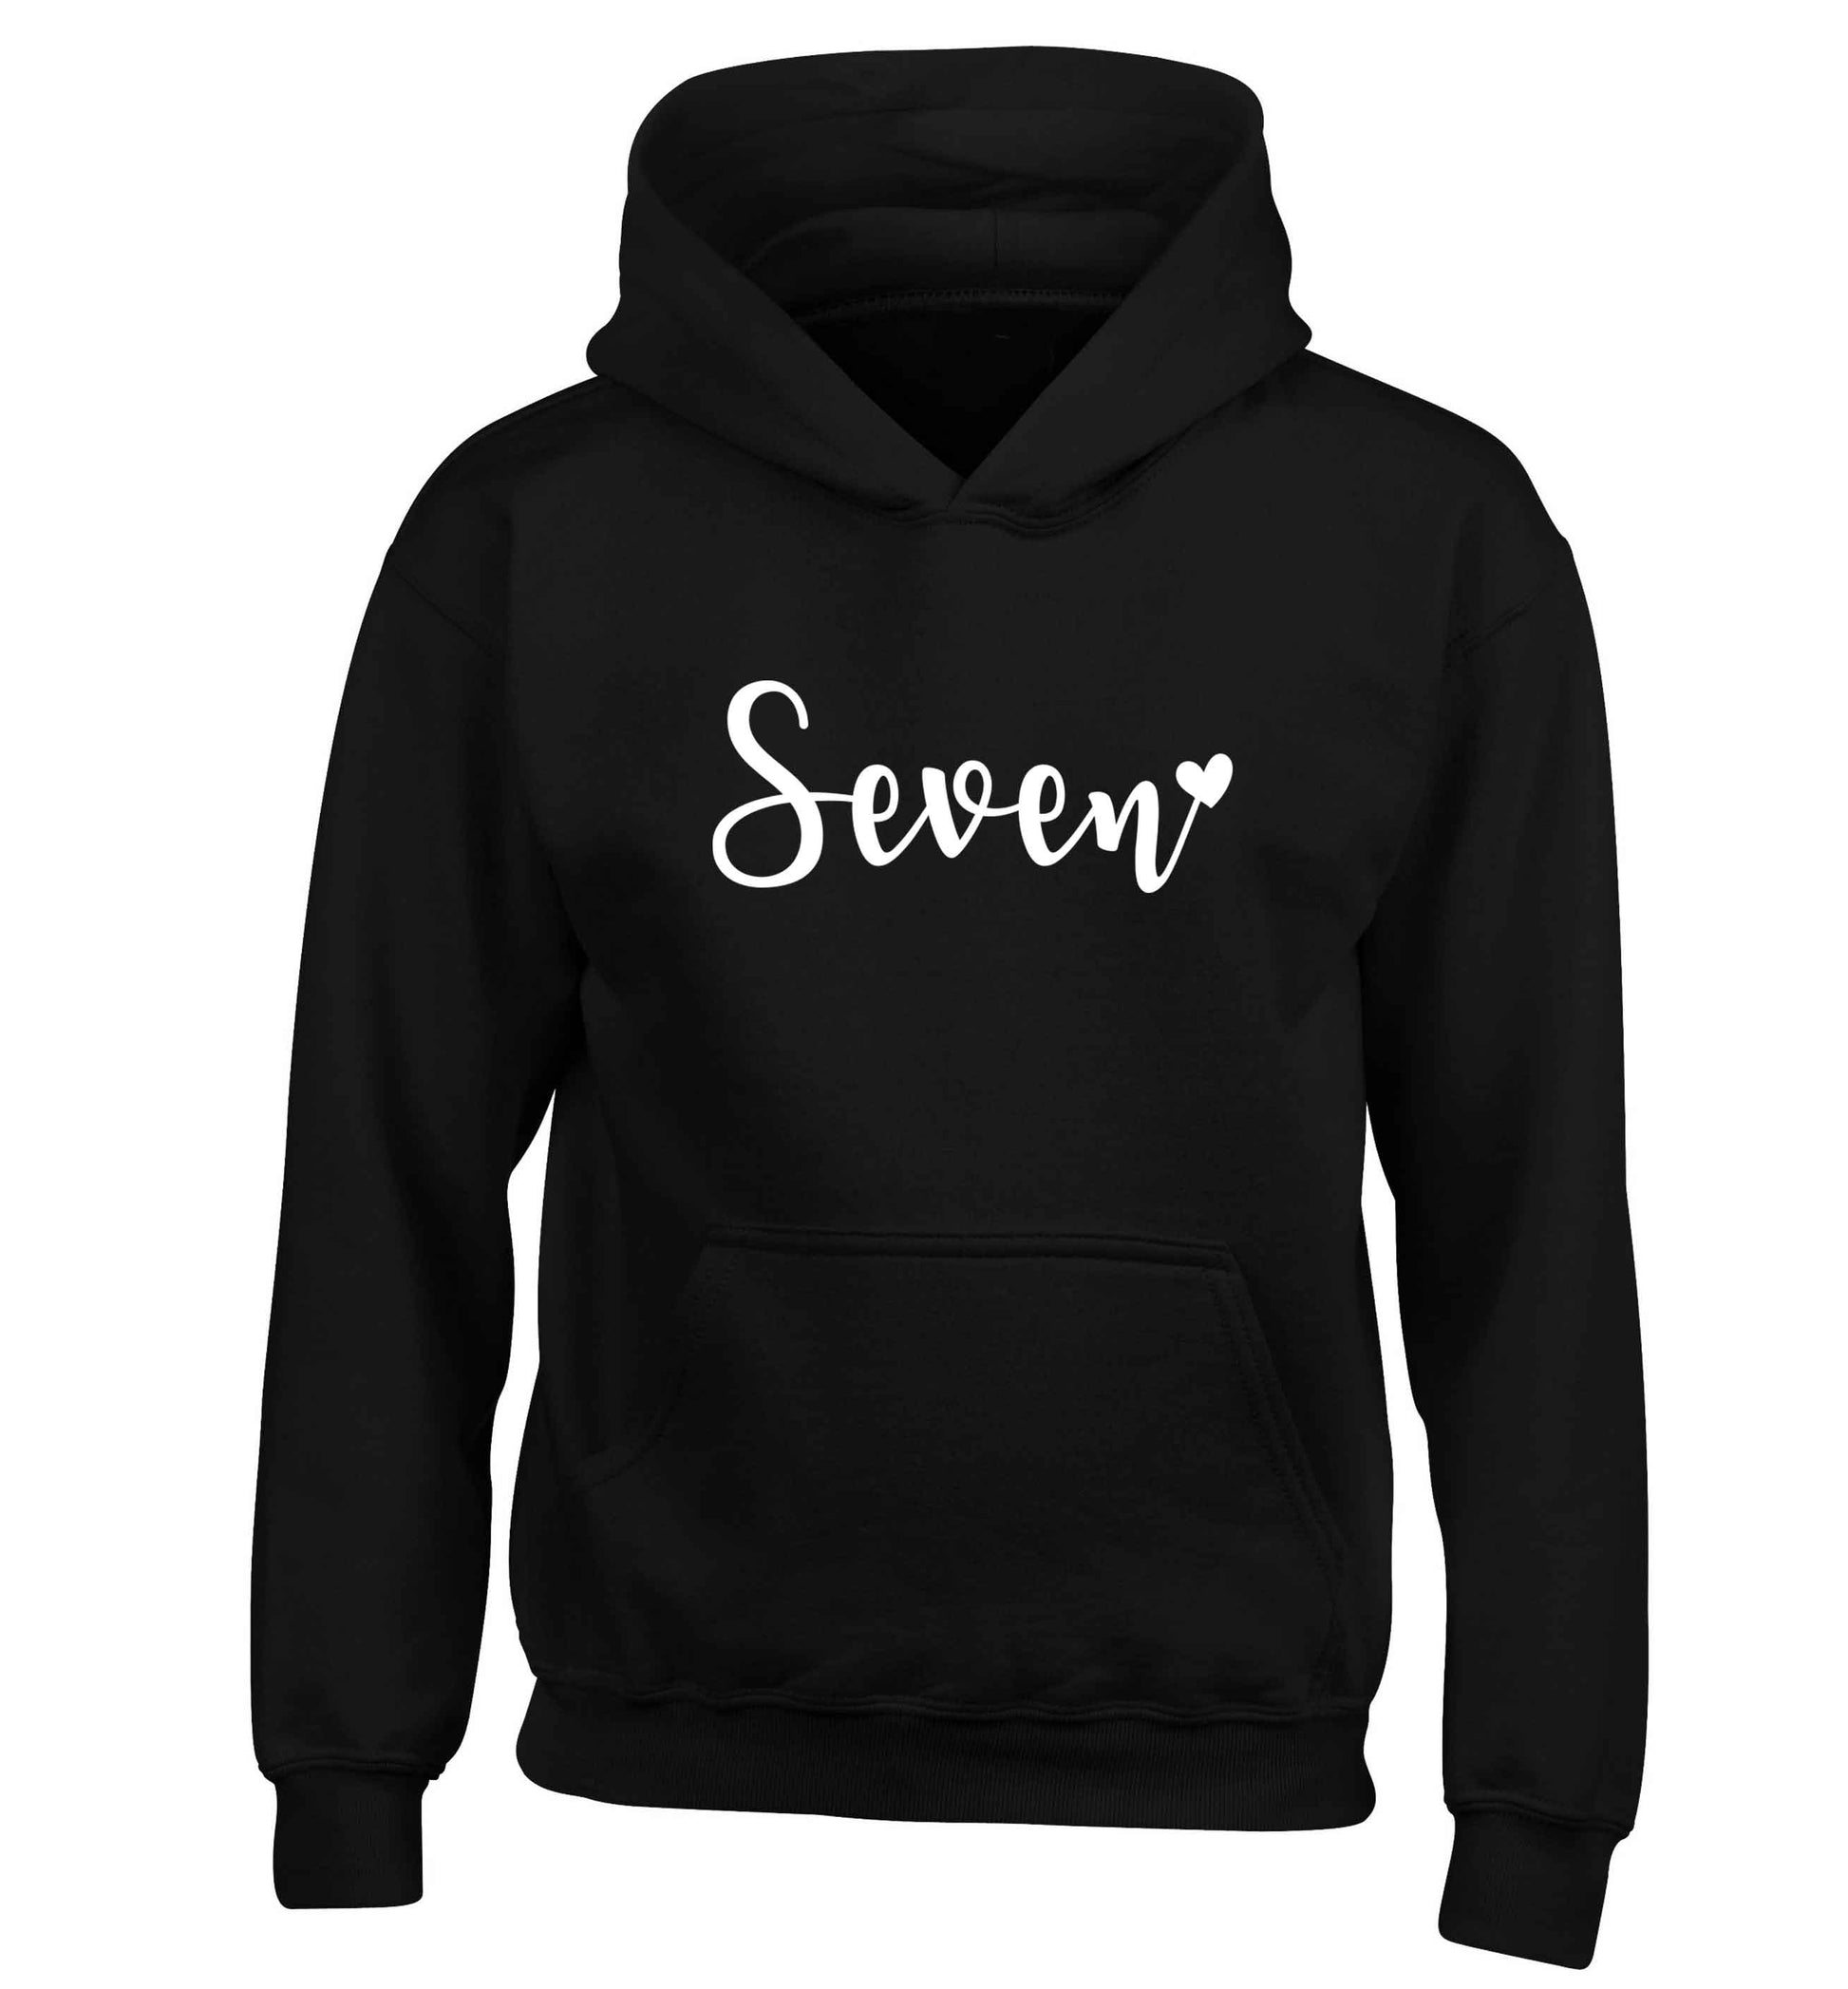 Seven and heart children's black hoodie 12-13 Years